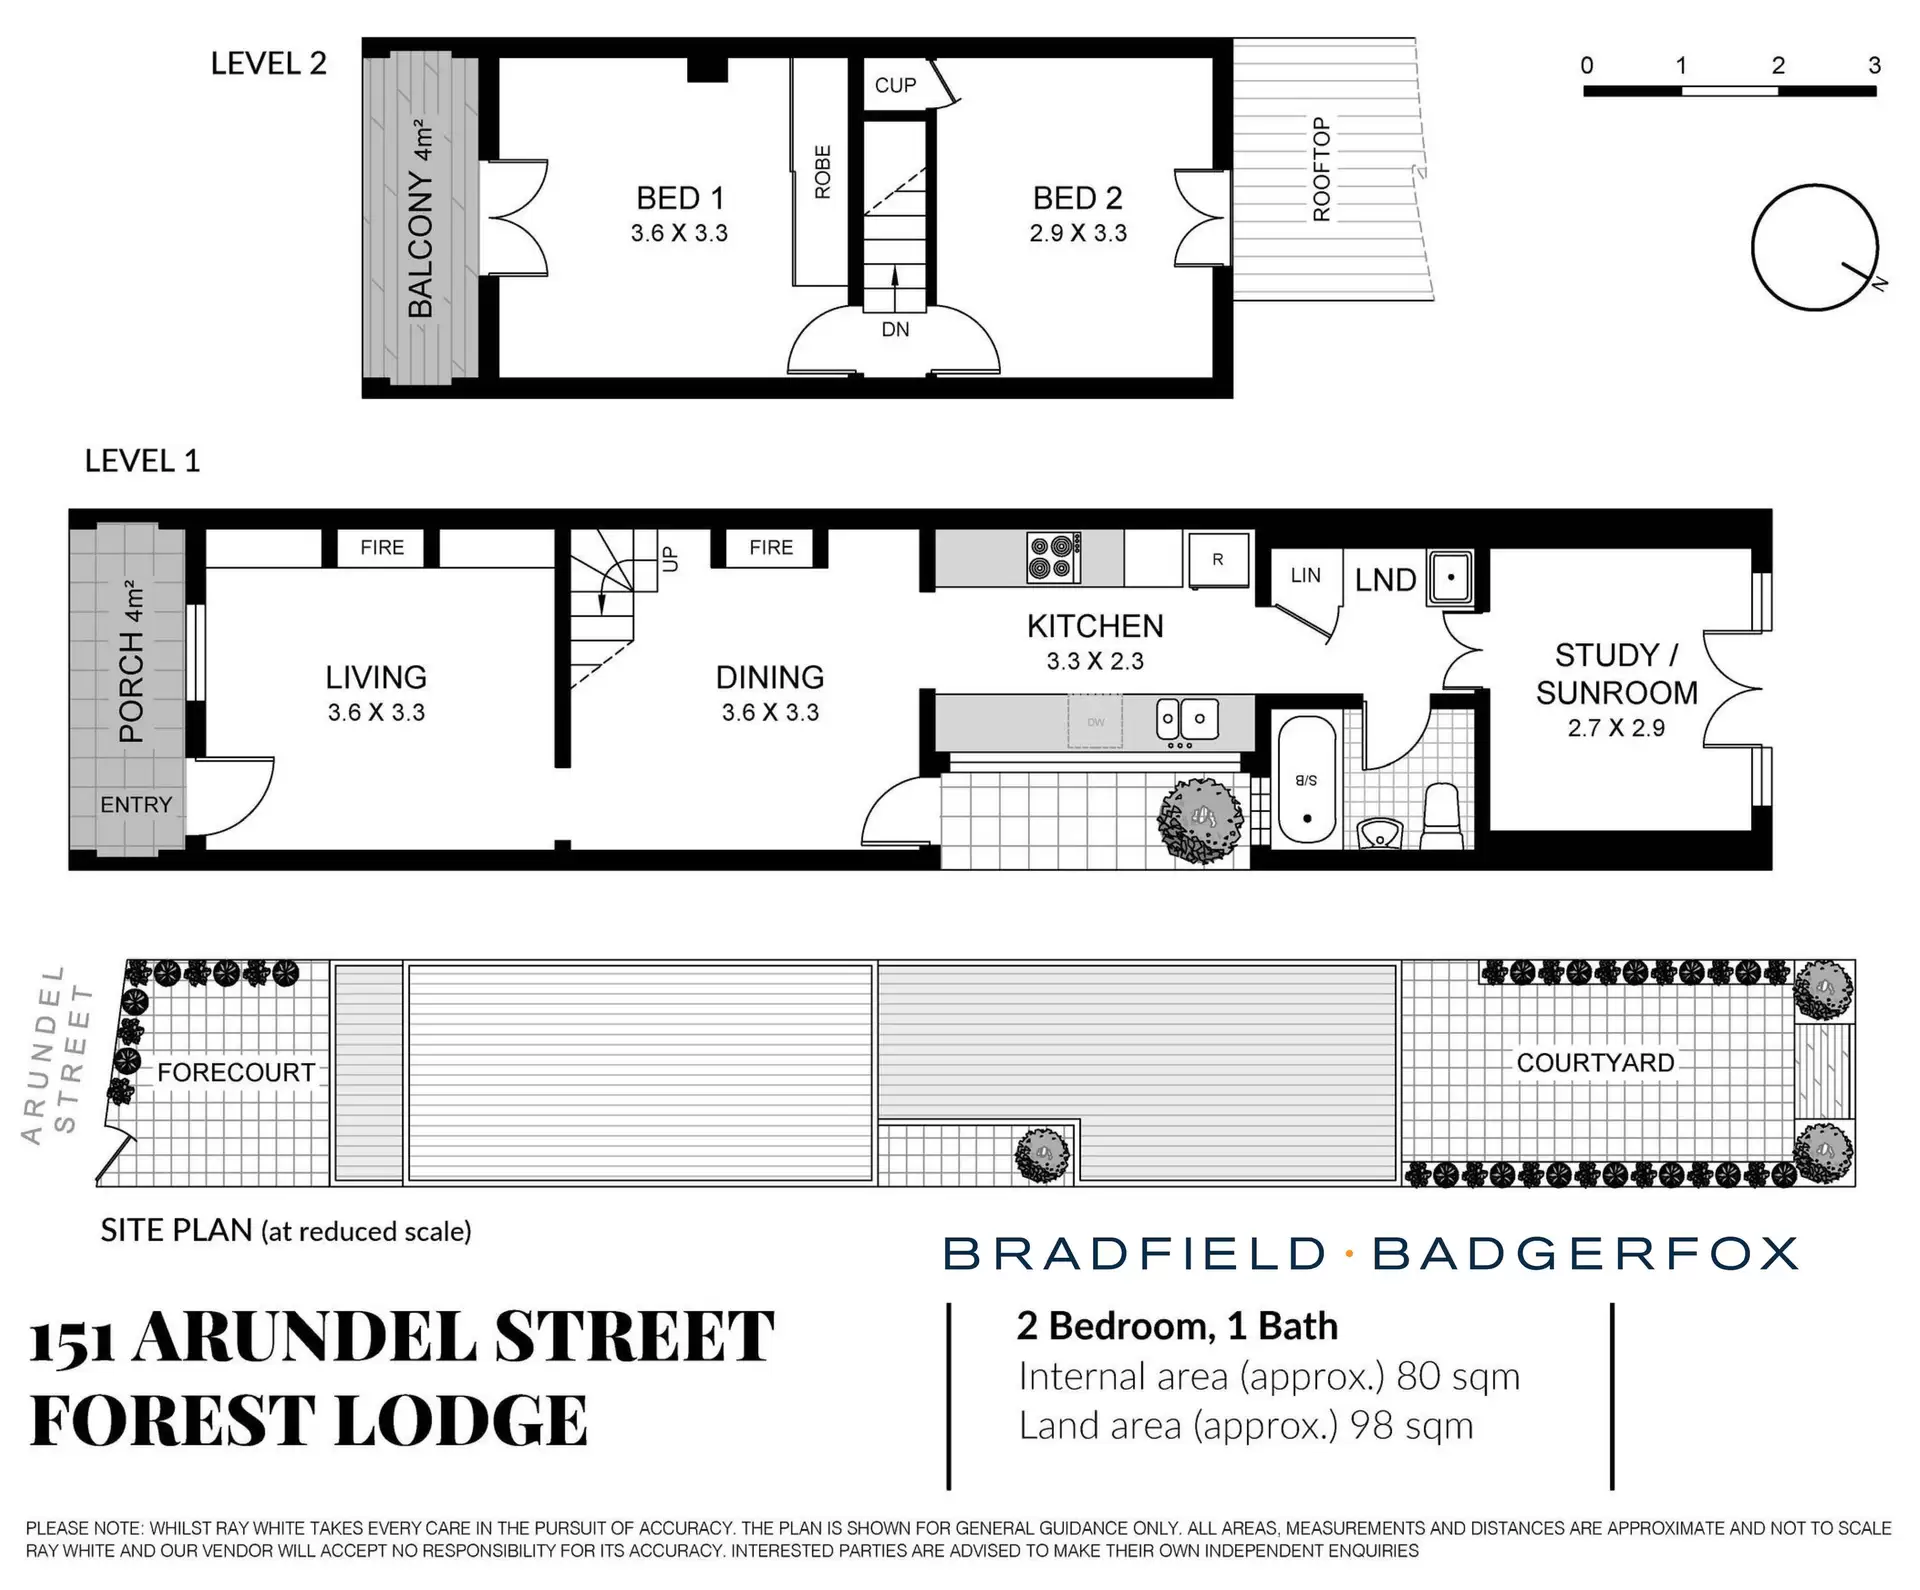 151 Arundel Street, Forest Lodge Leased by Bradfield Badgerfox - image 1